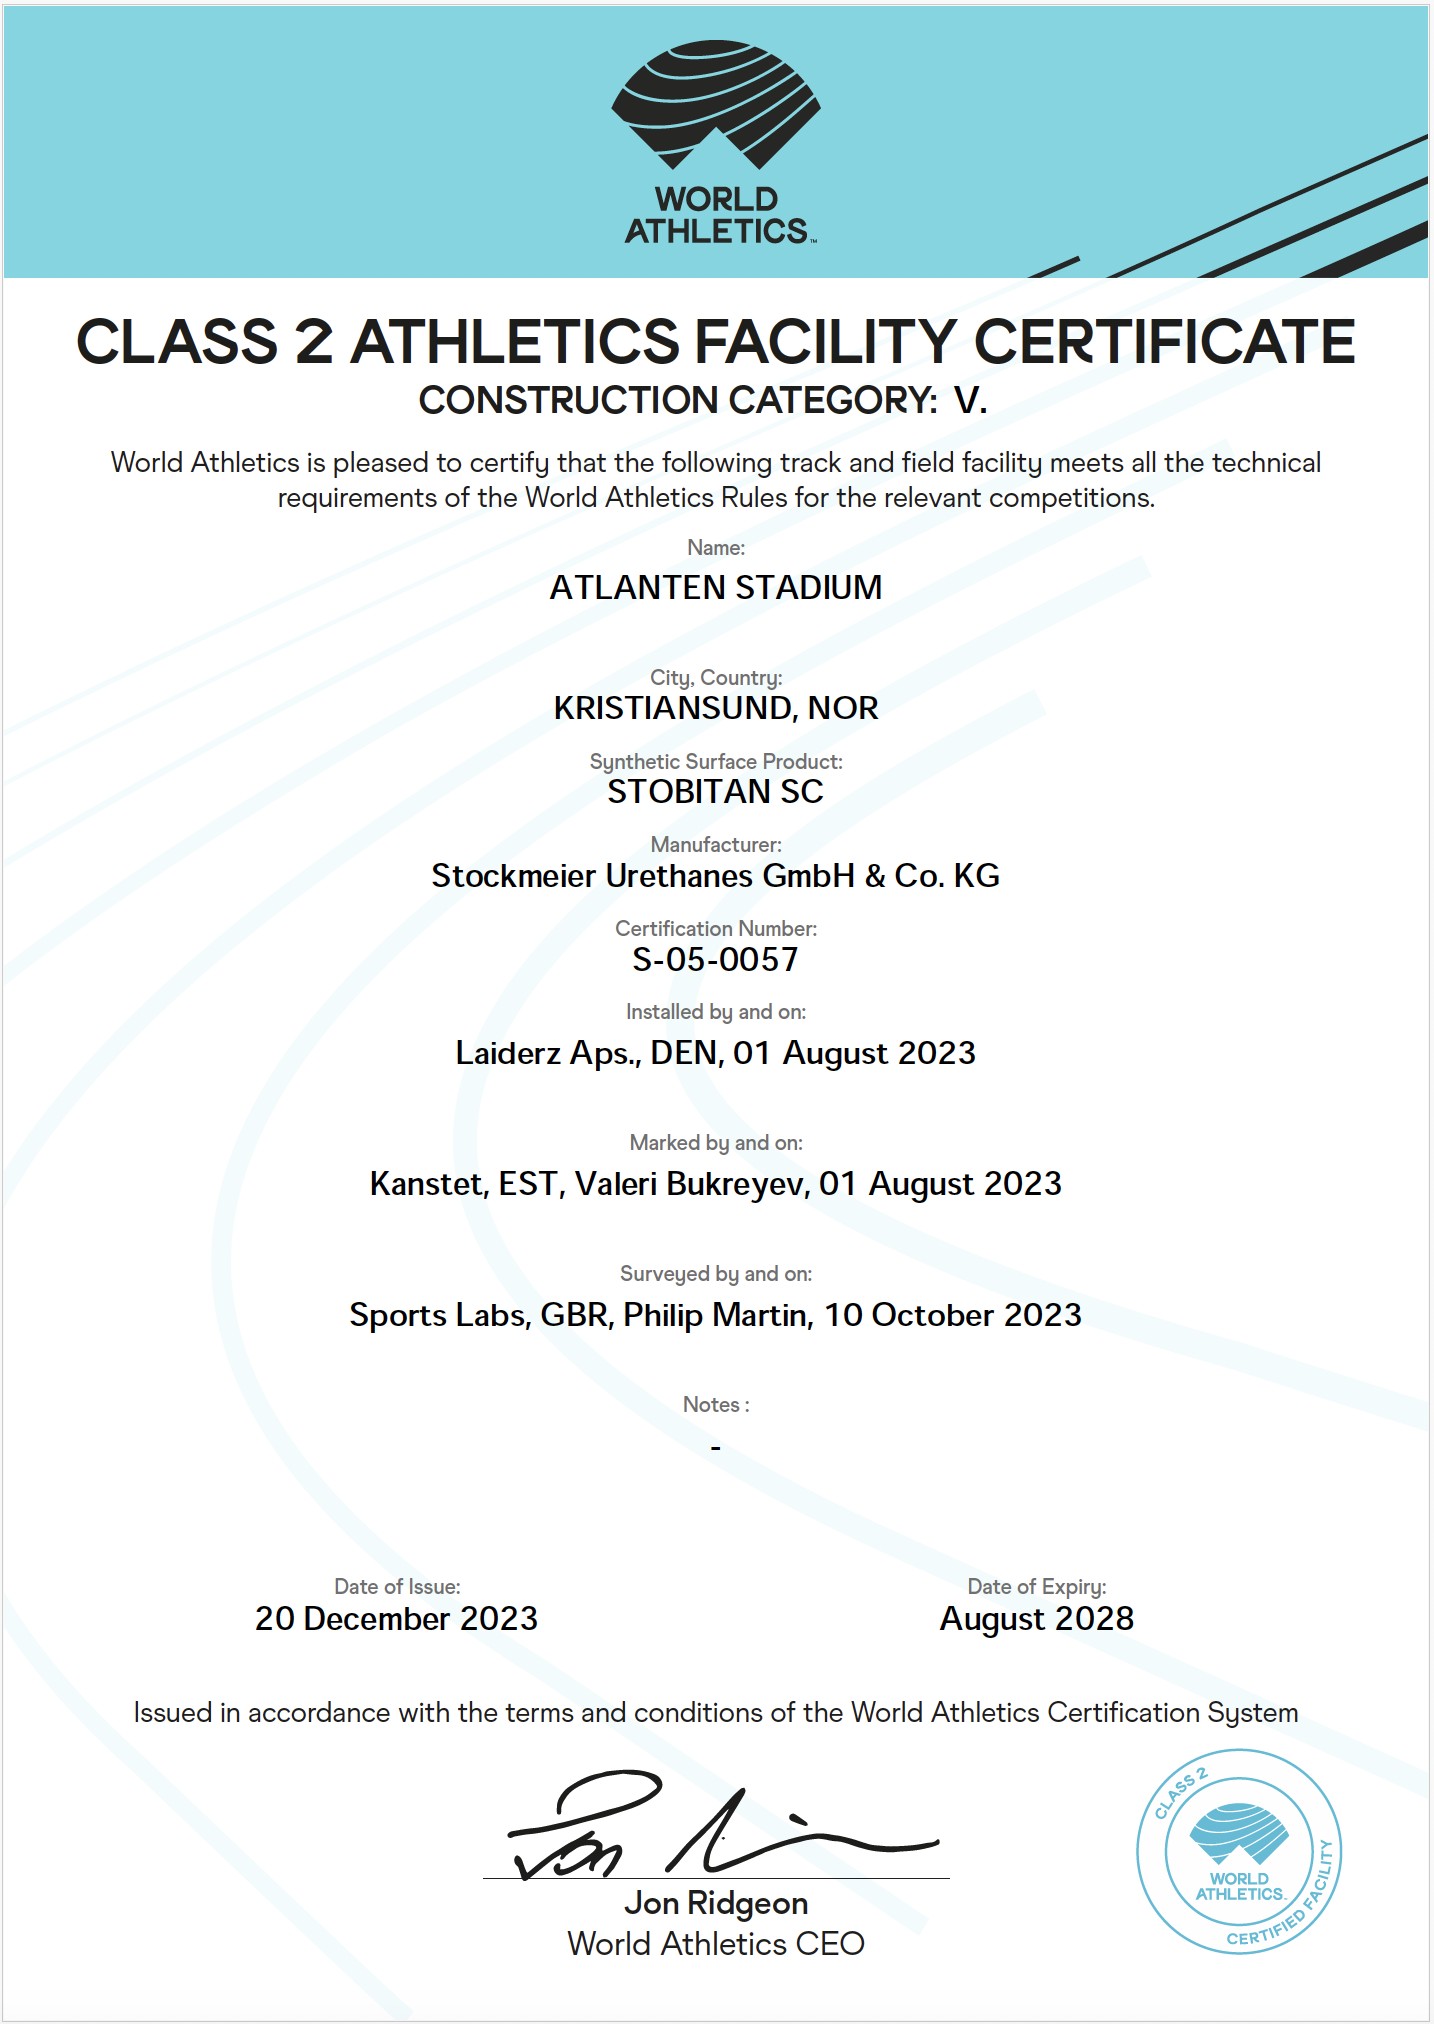 Certificat World Athletics Class 2, Construction Category: V.